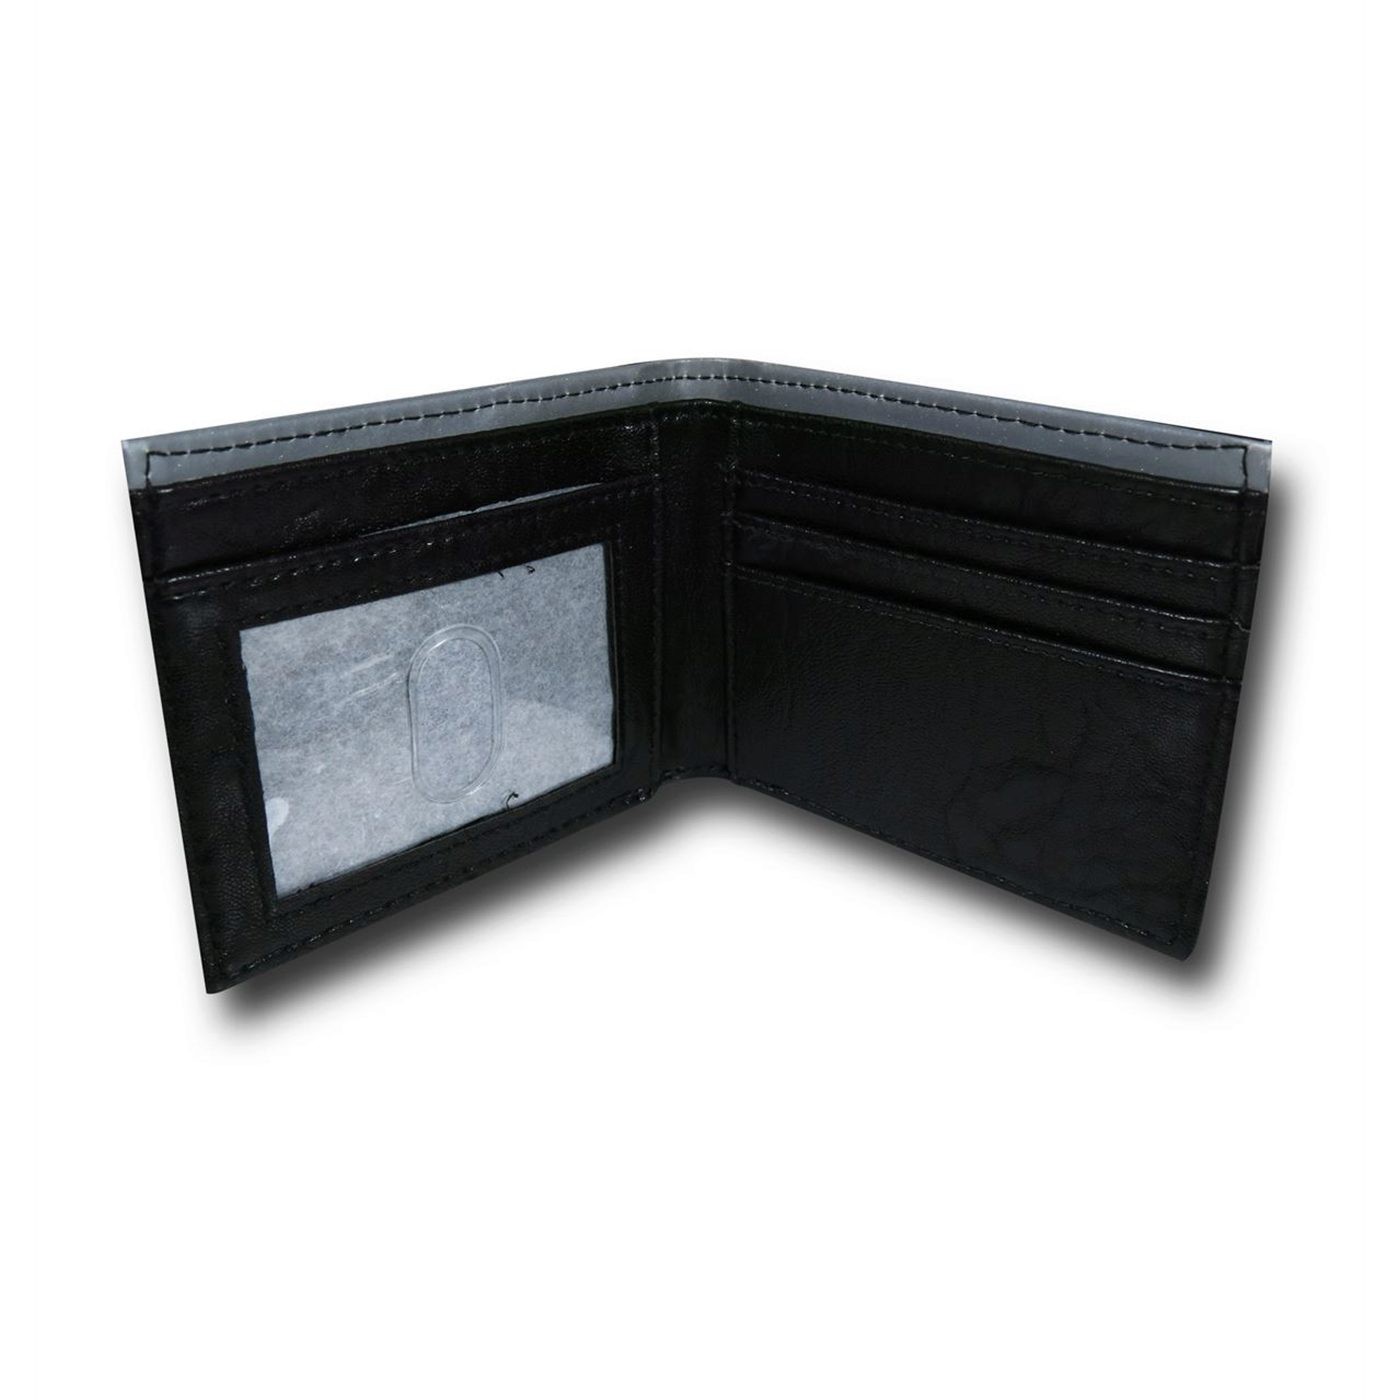 Winter Soldier Suit-Up Men's Bi-Fold Wallet